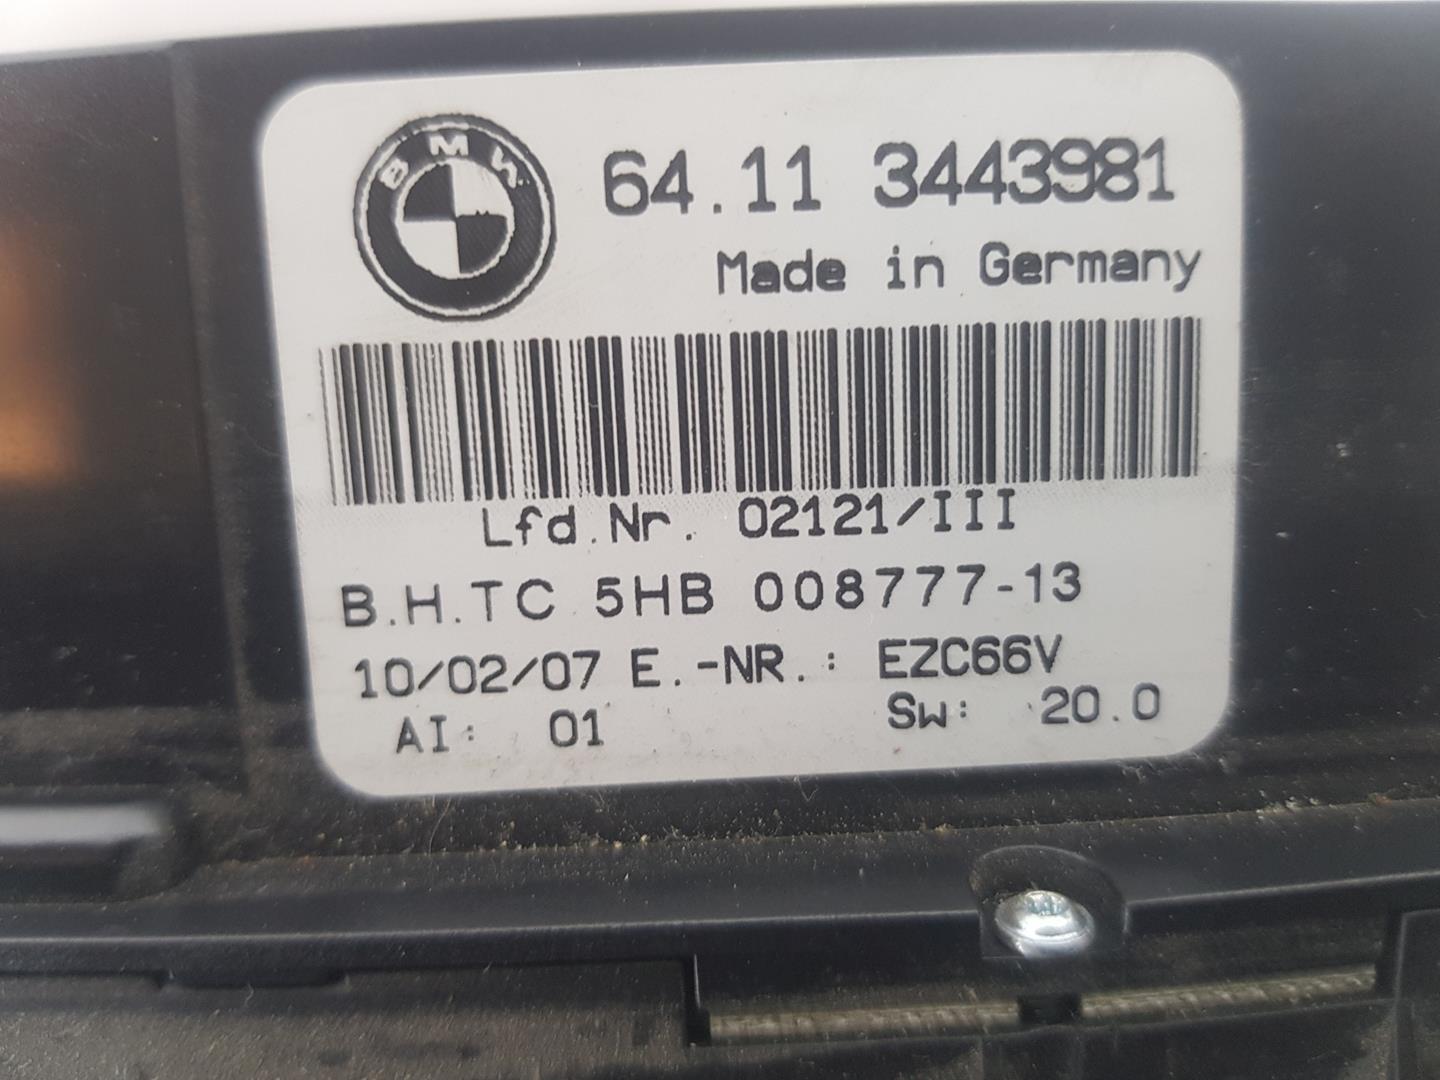 BMW X3 E83 (2003-2010) Pегулятор климы 64113443981, 3443981 19781988